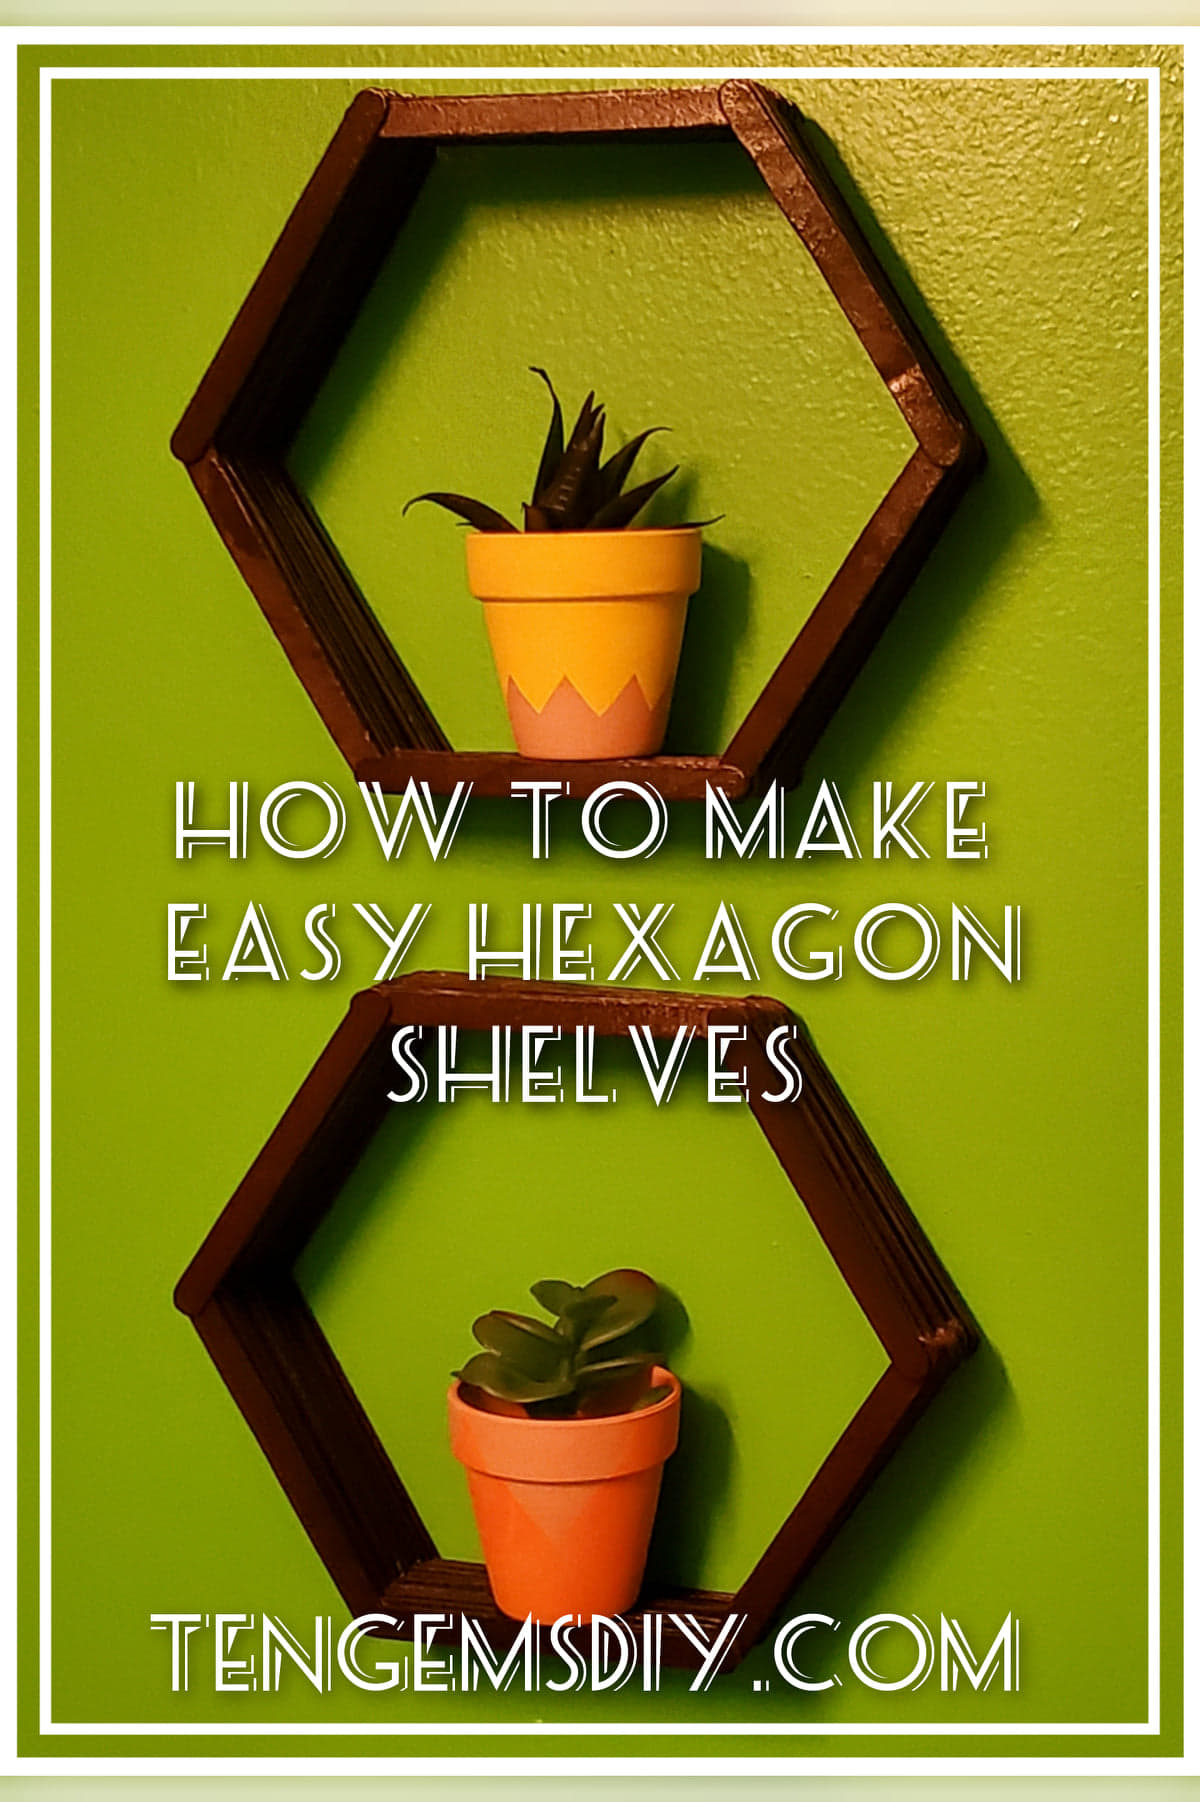 How to Make Easy Hexagon Shelves